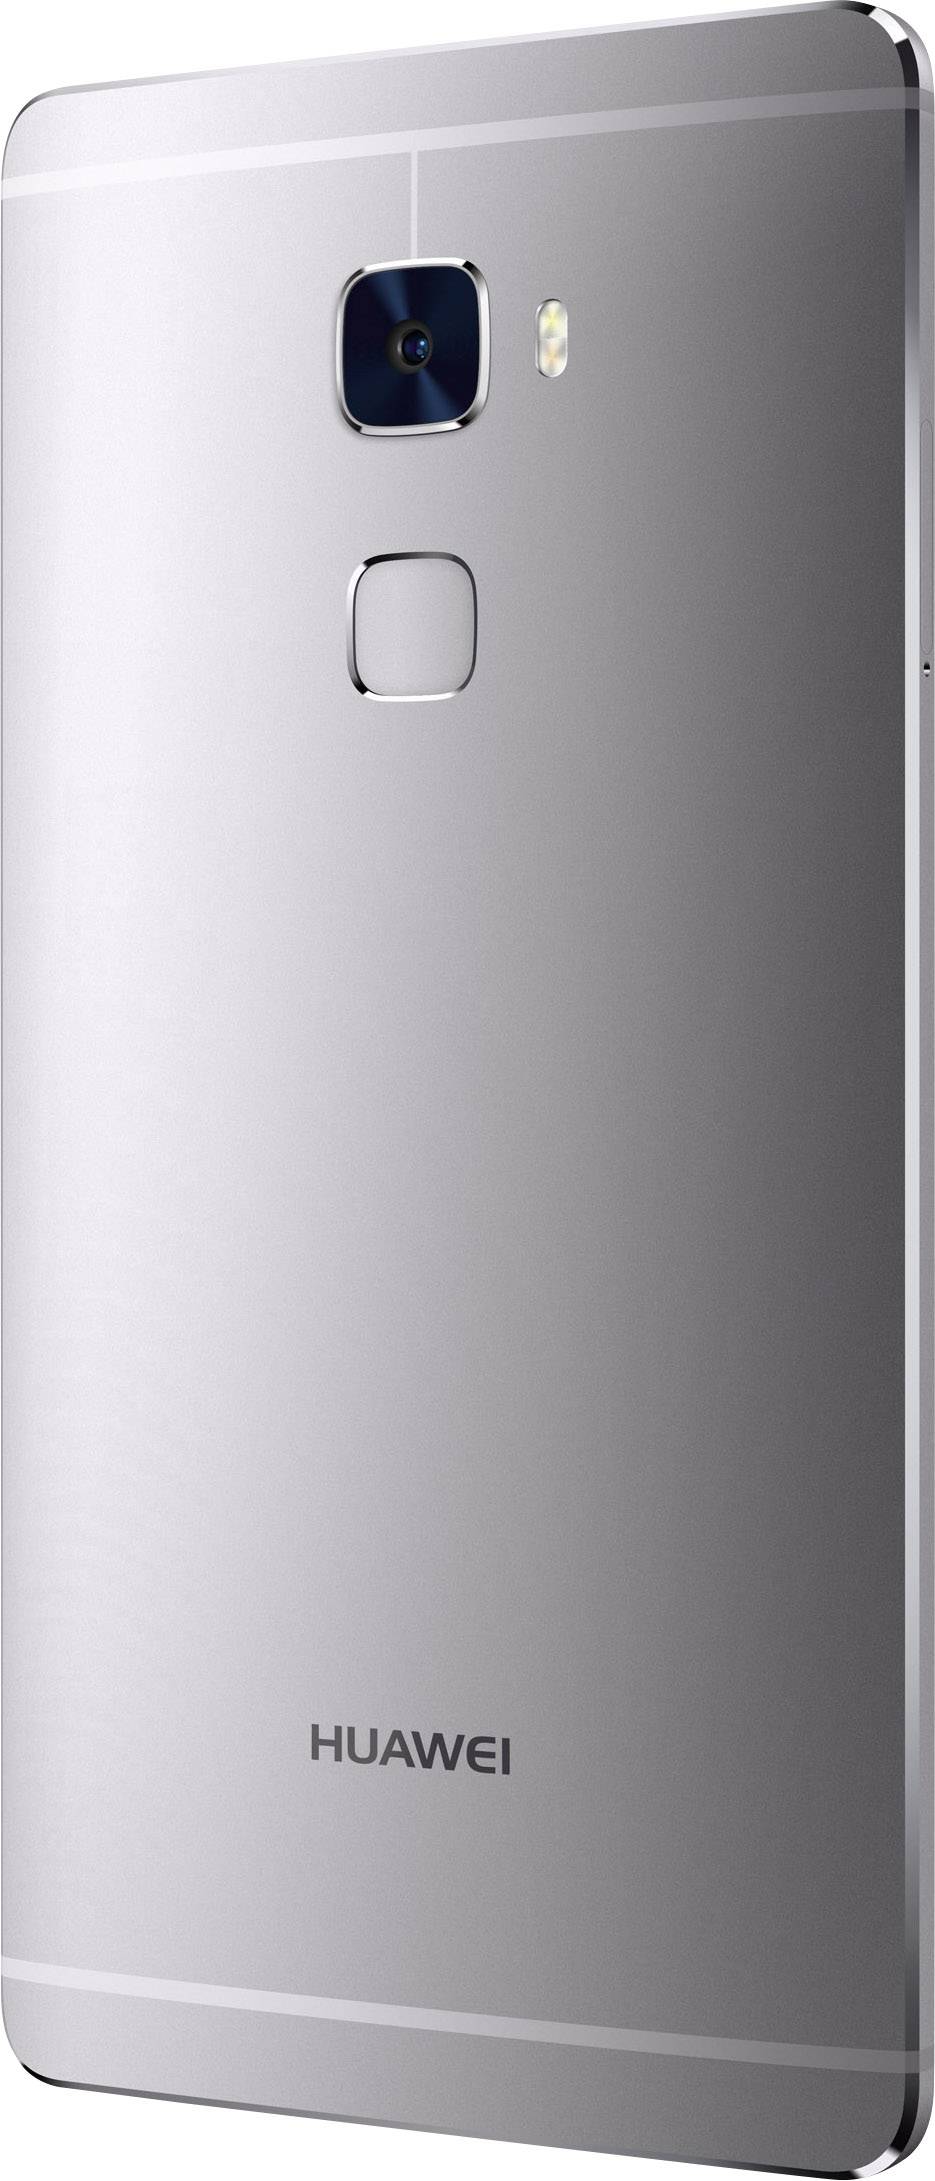 canvas zonlicht bolvormig Huawei Mate S Smartphone 32 GB () Grey | Conrad.com